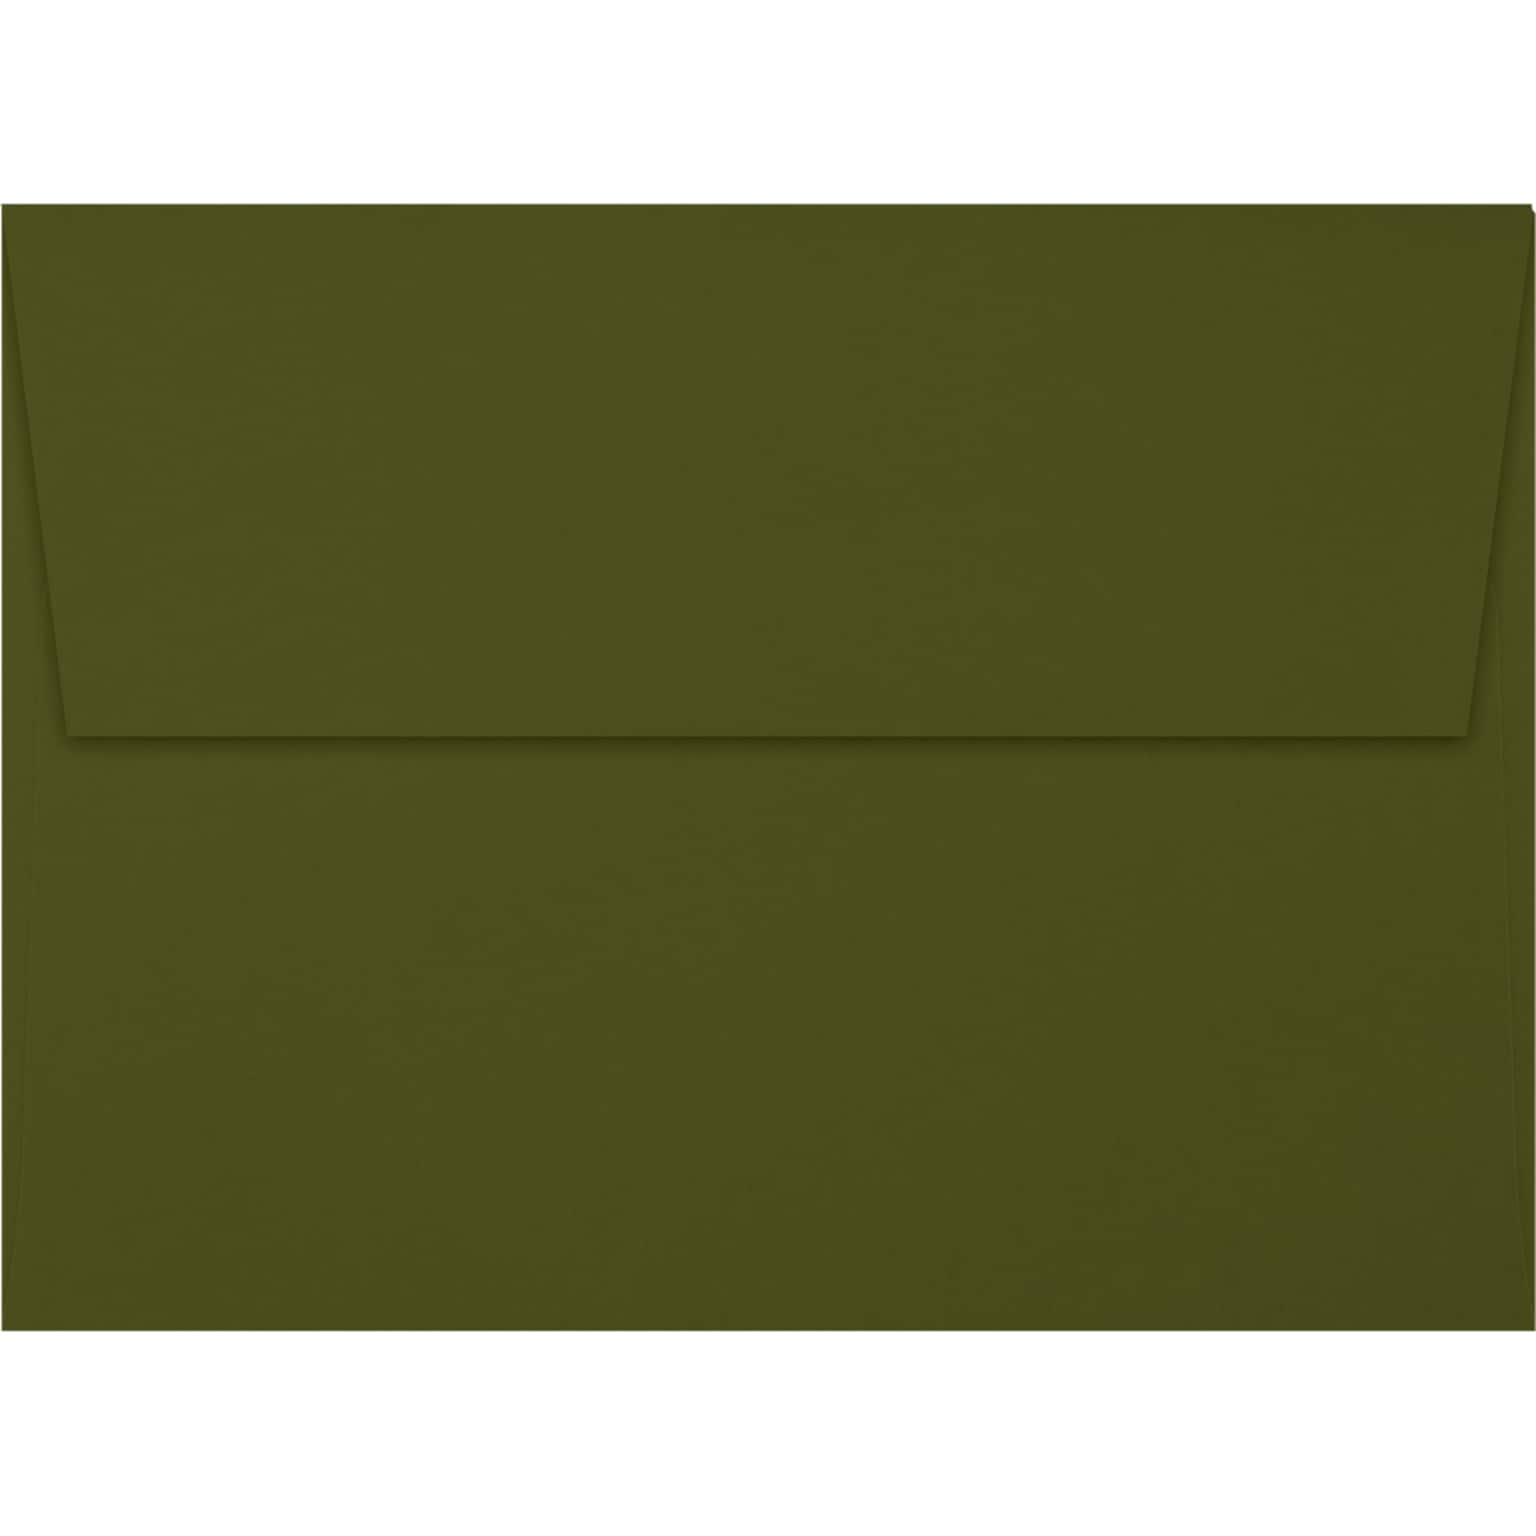 JAM Paper A6 Square Flap Envelopes, Peel & Press, 70lb, 4 3/4 x 6 1/2, Olive Green, 50 Pack (4875-81-50)